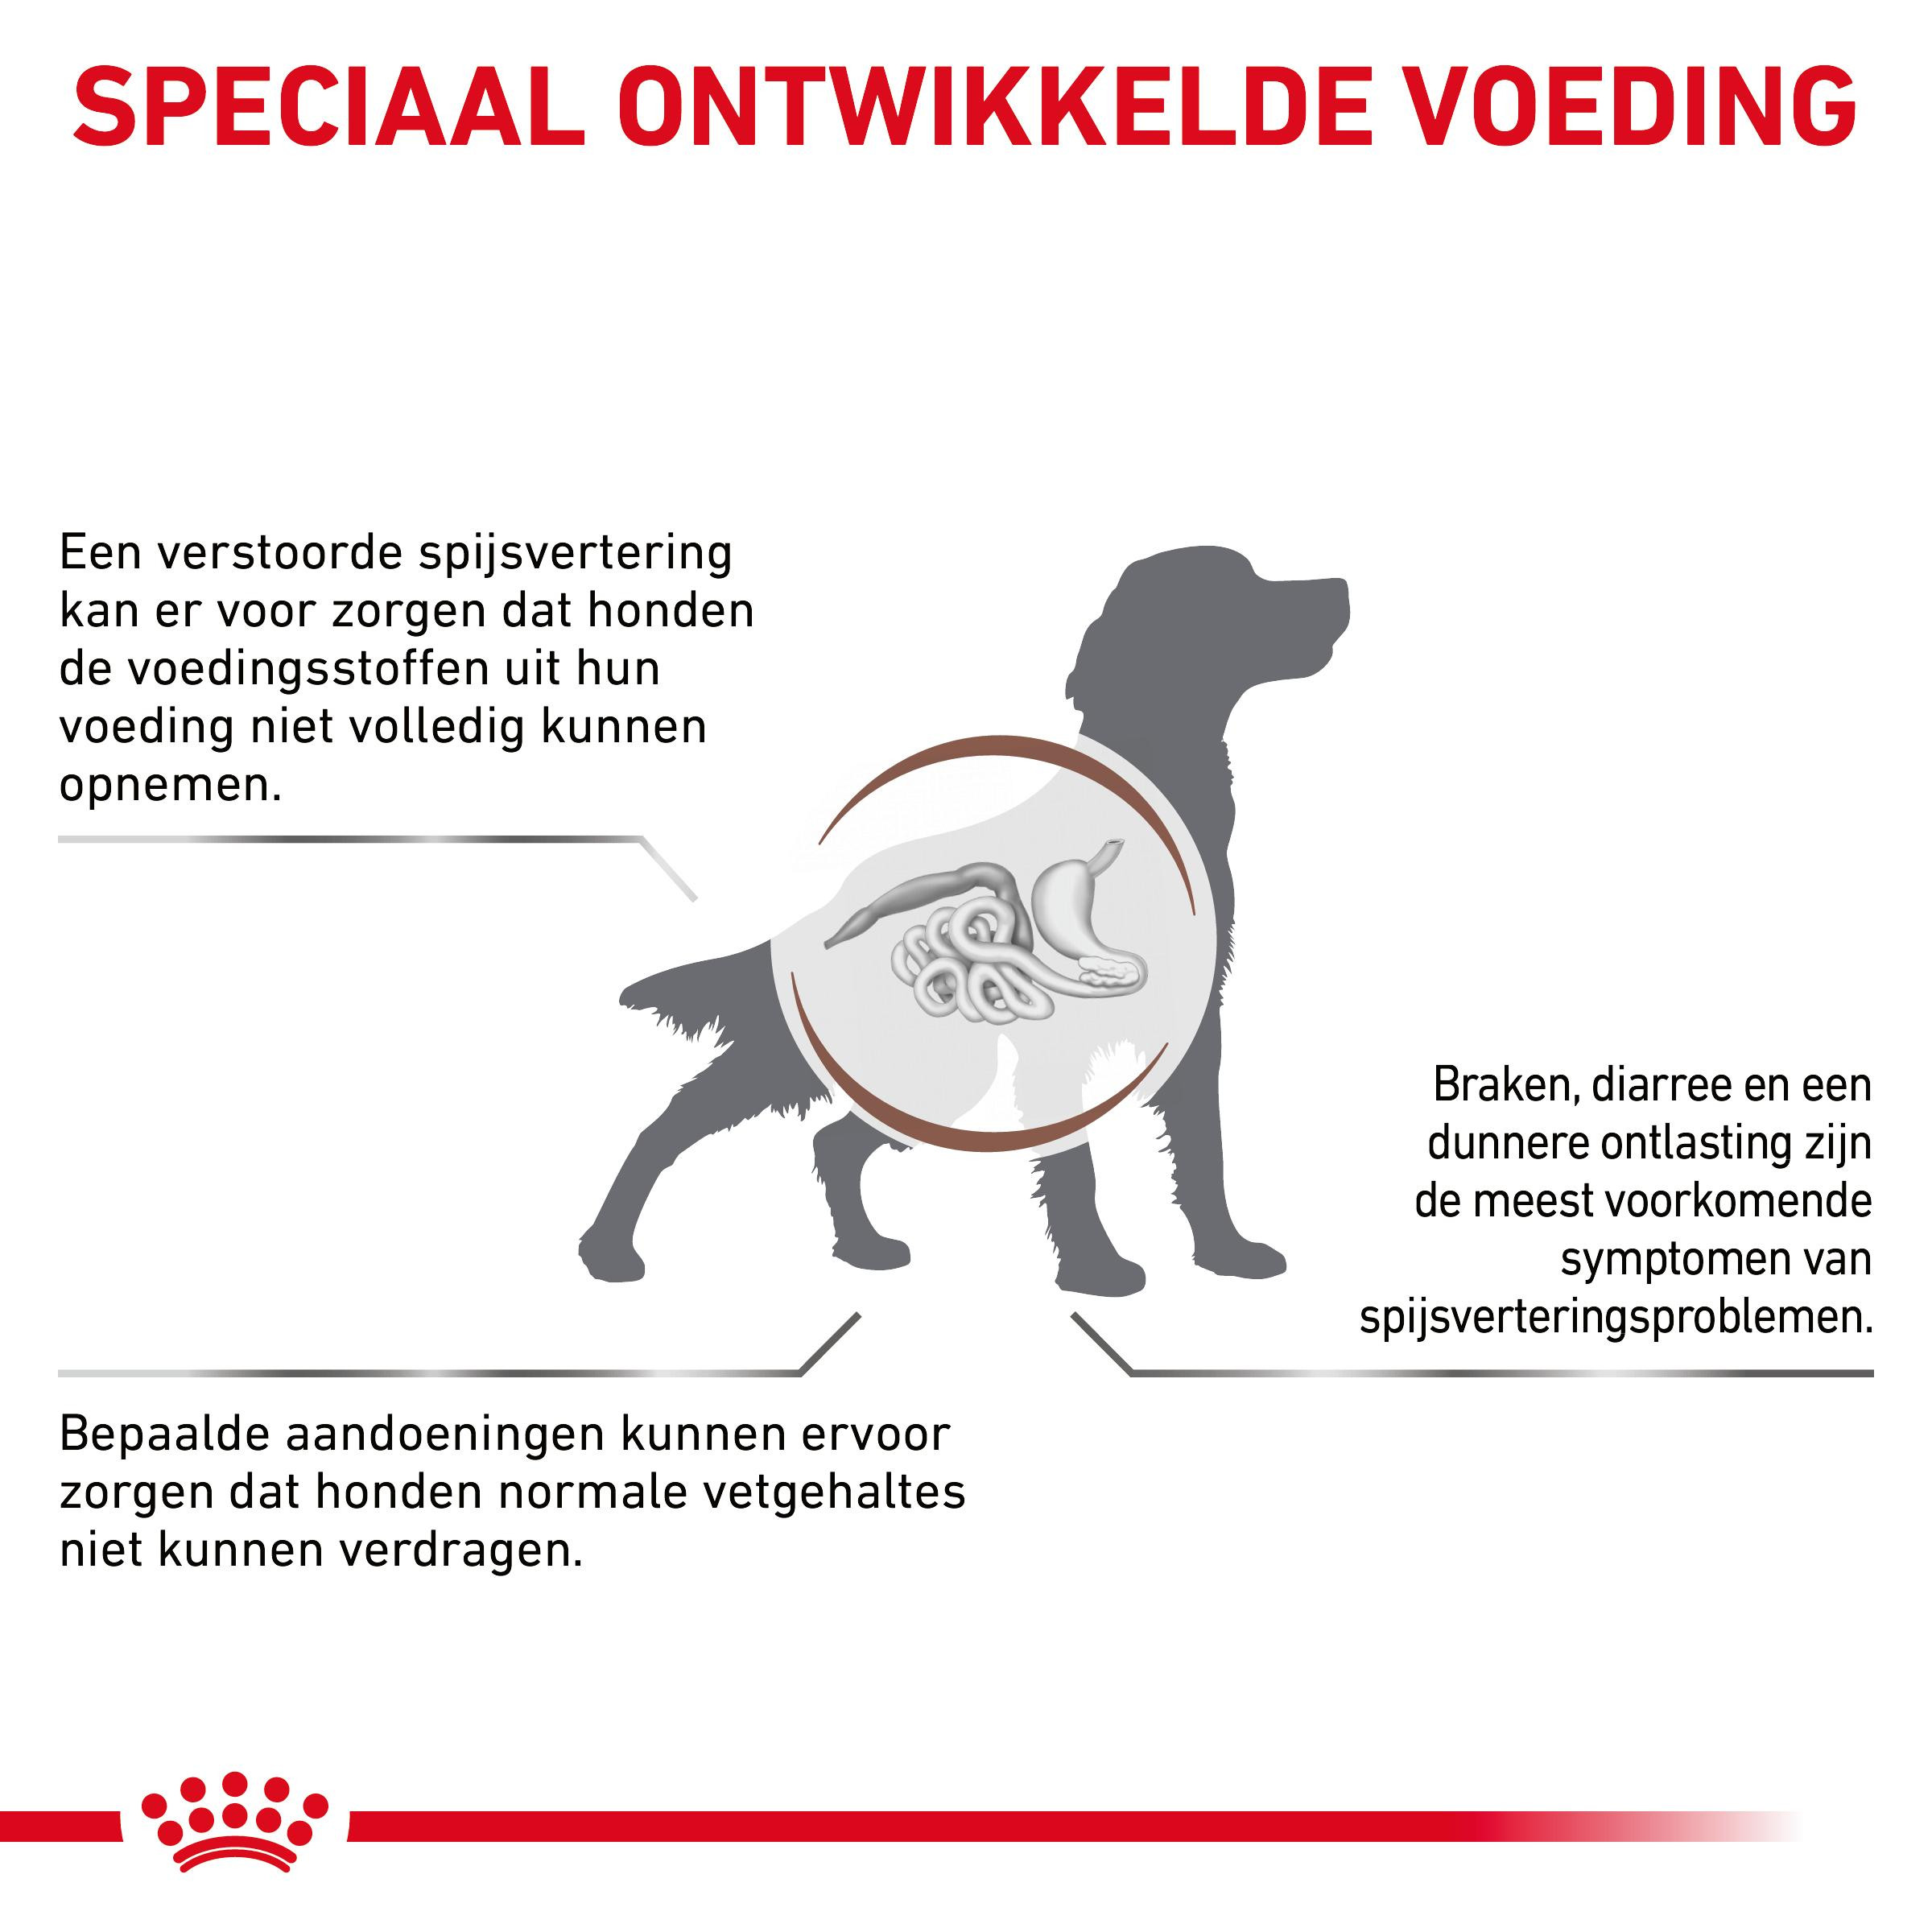 Royal Canin Veterinary Gastrointestinal Low Fat natvoer hond